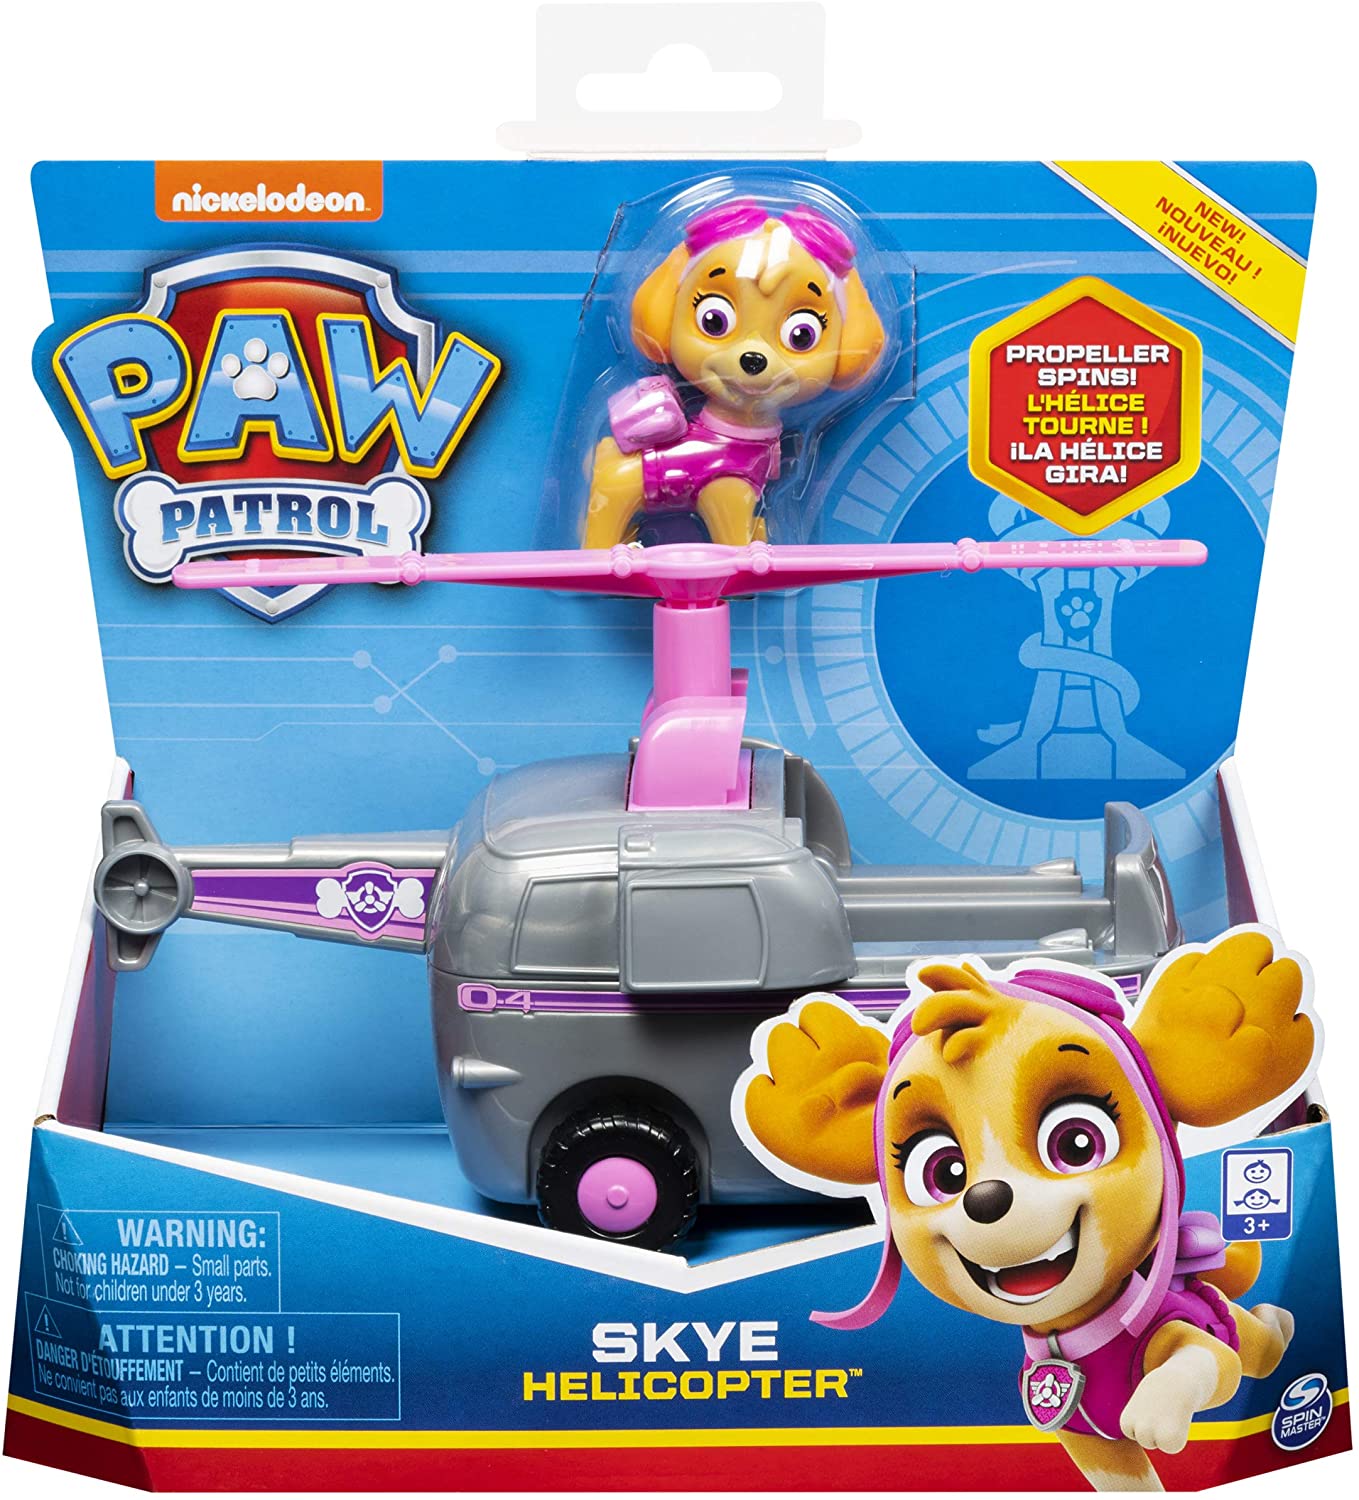 stella figurine the pat 'patrol gift noel Paw patrol vehicle child game